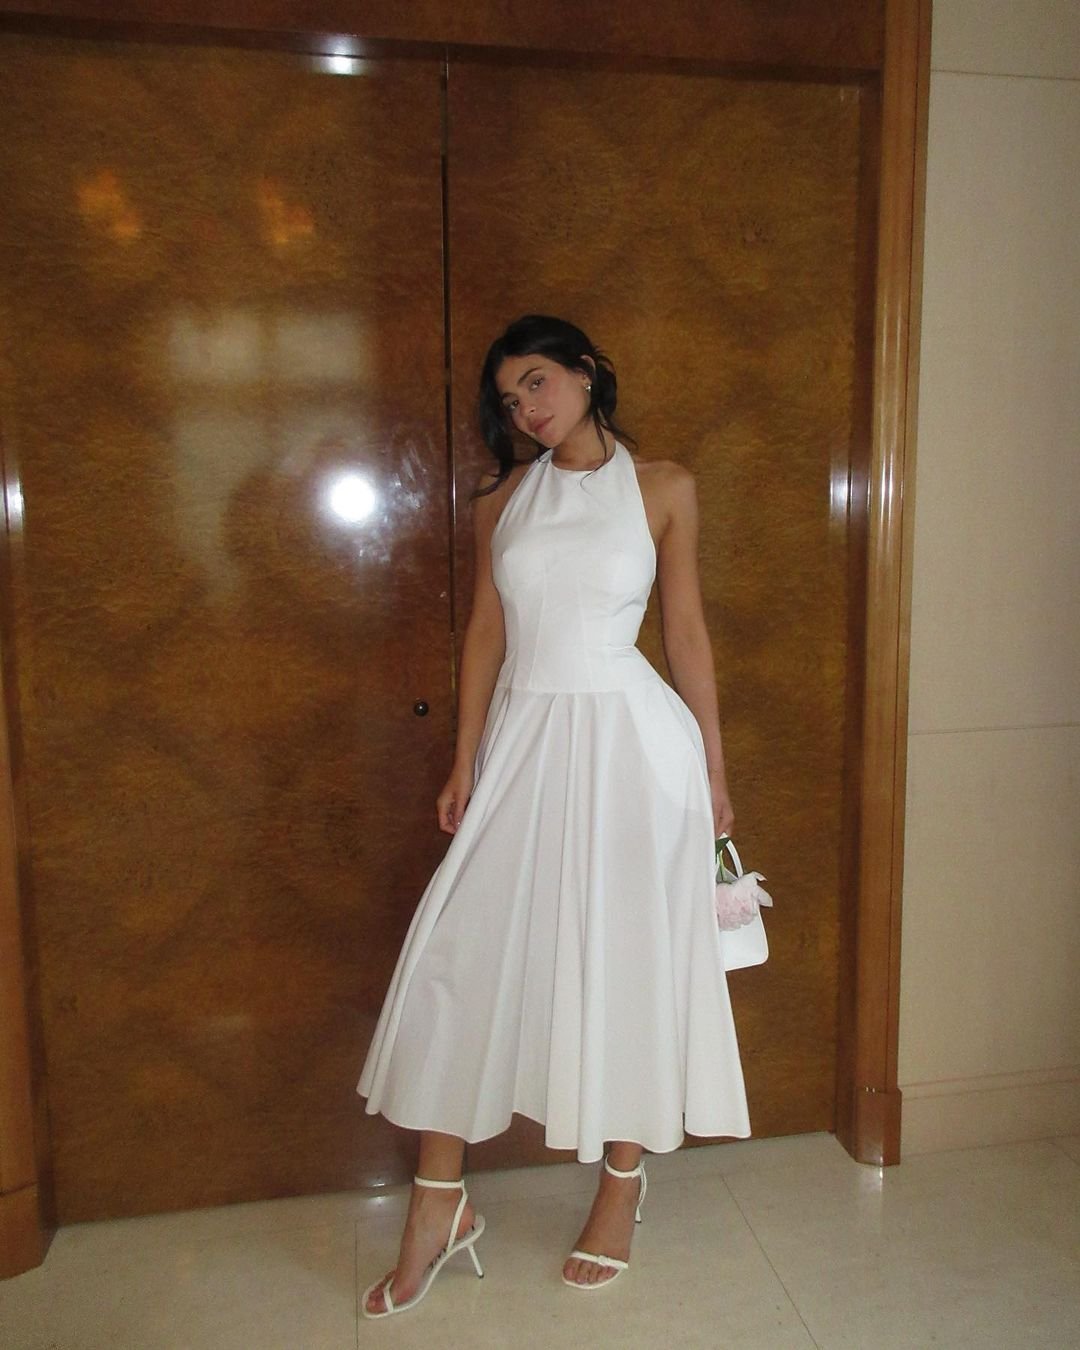 It girls - Kylie Jenner, vestido branco, vestido romântico - Quiet Luxury - Inverno - Street Style  - https://stealthelook.com.br